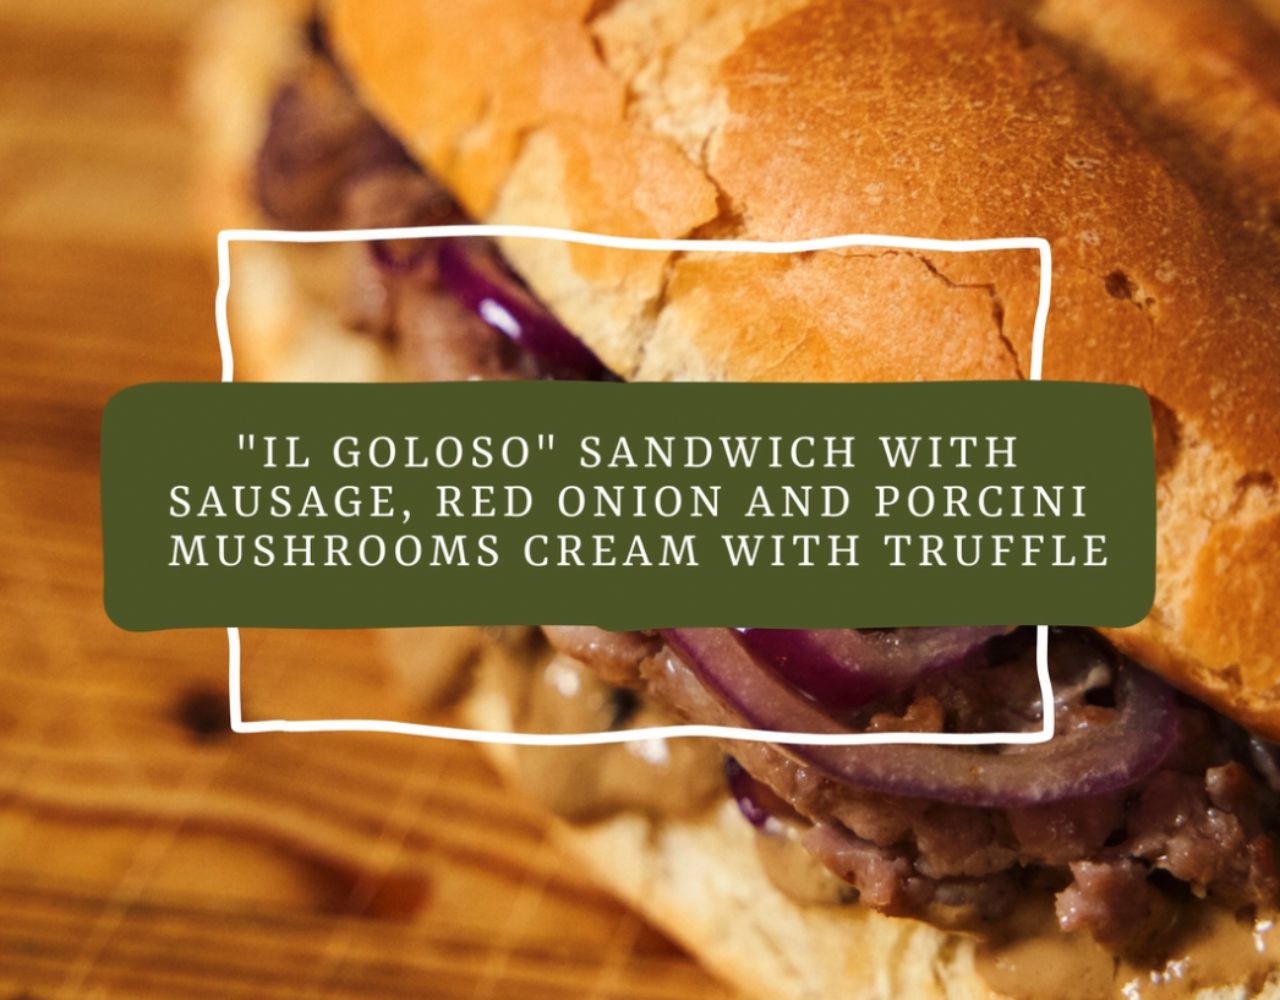 goloso sandwich with porcini mushrooms cream with truffle